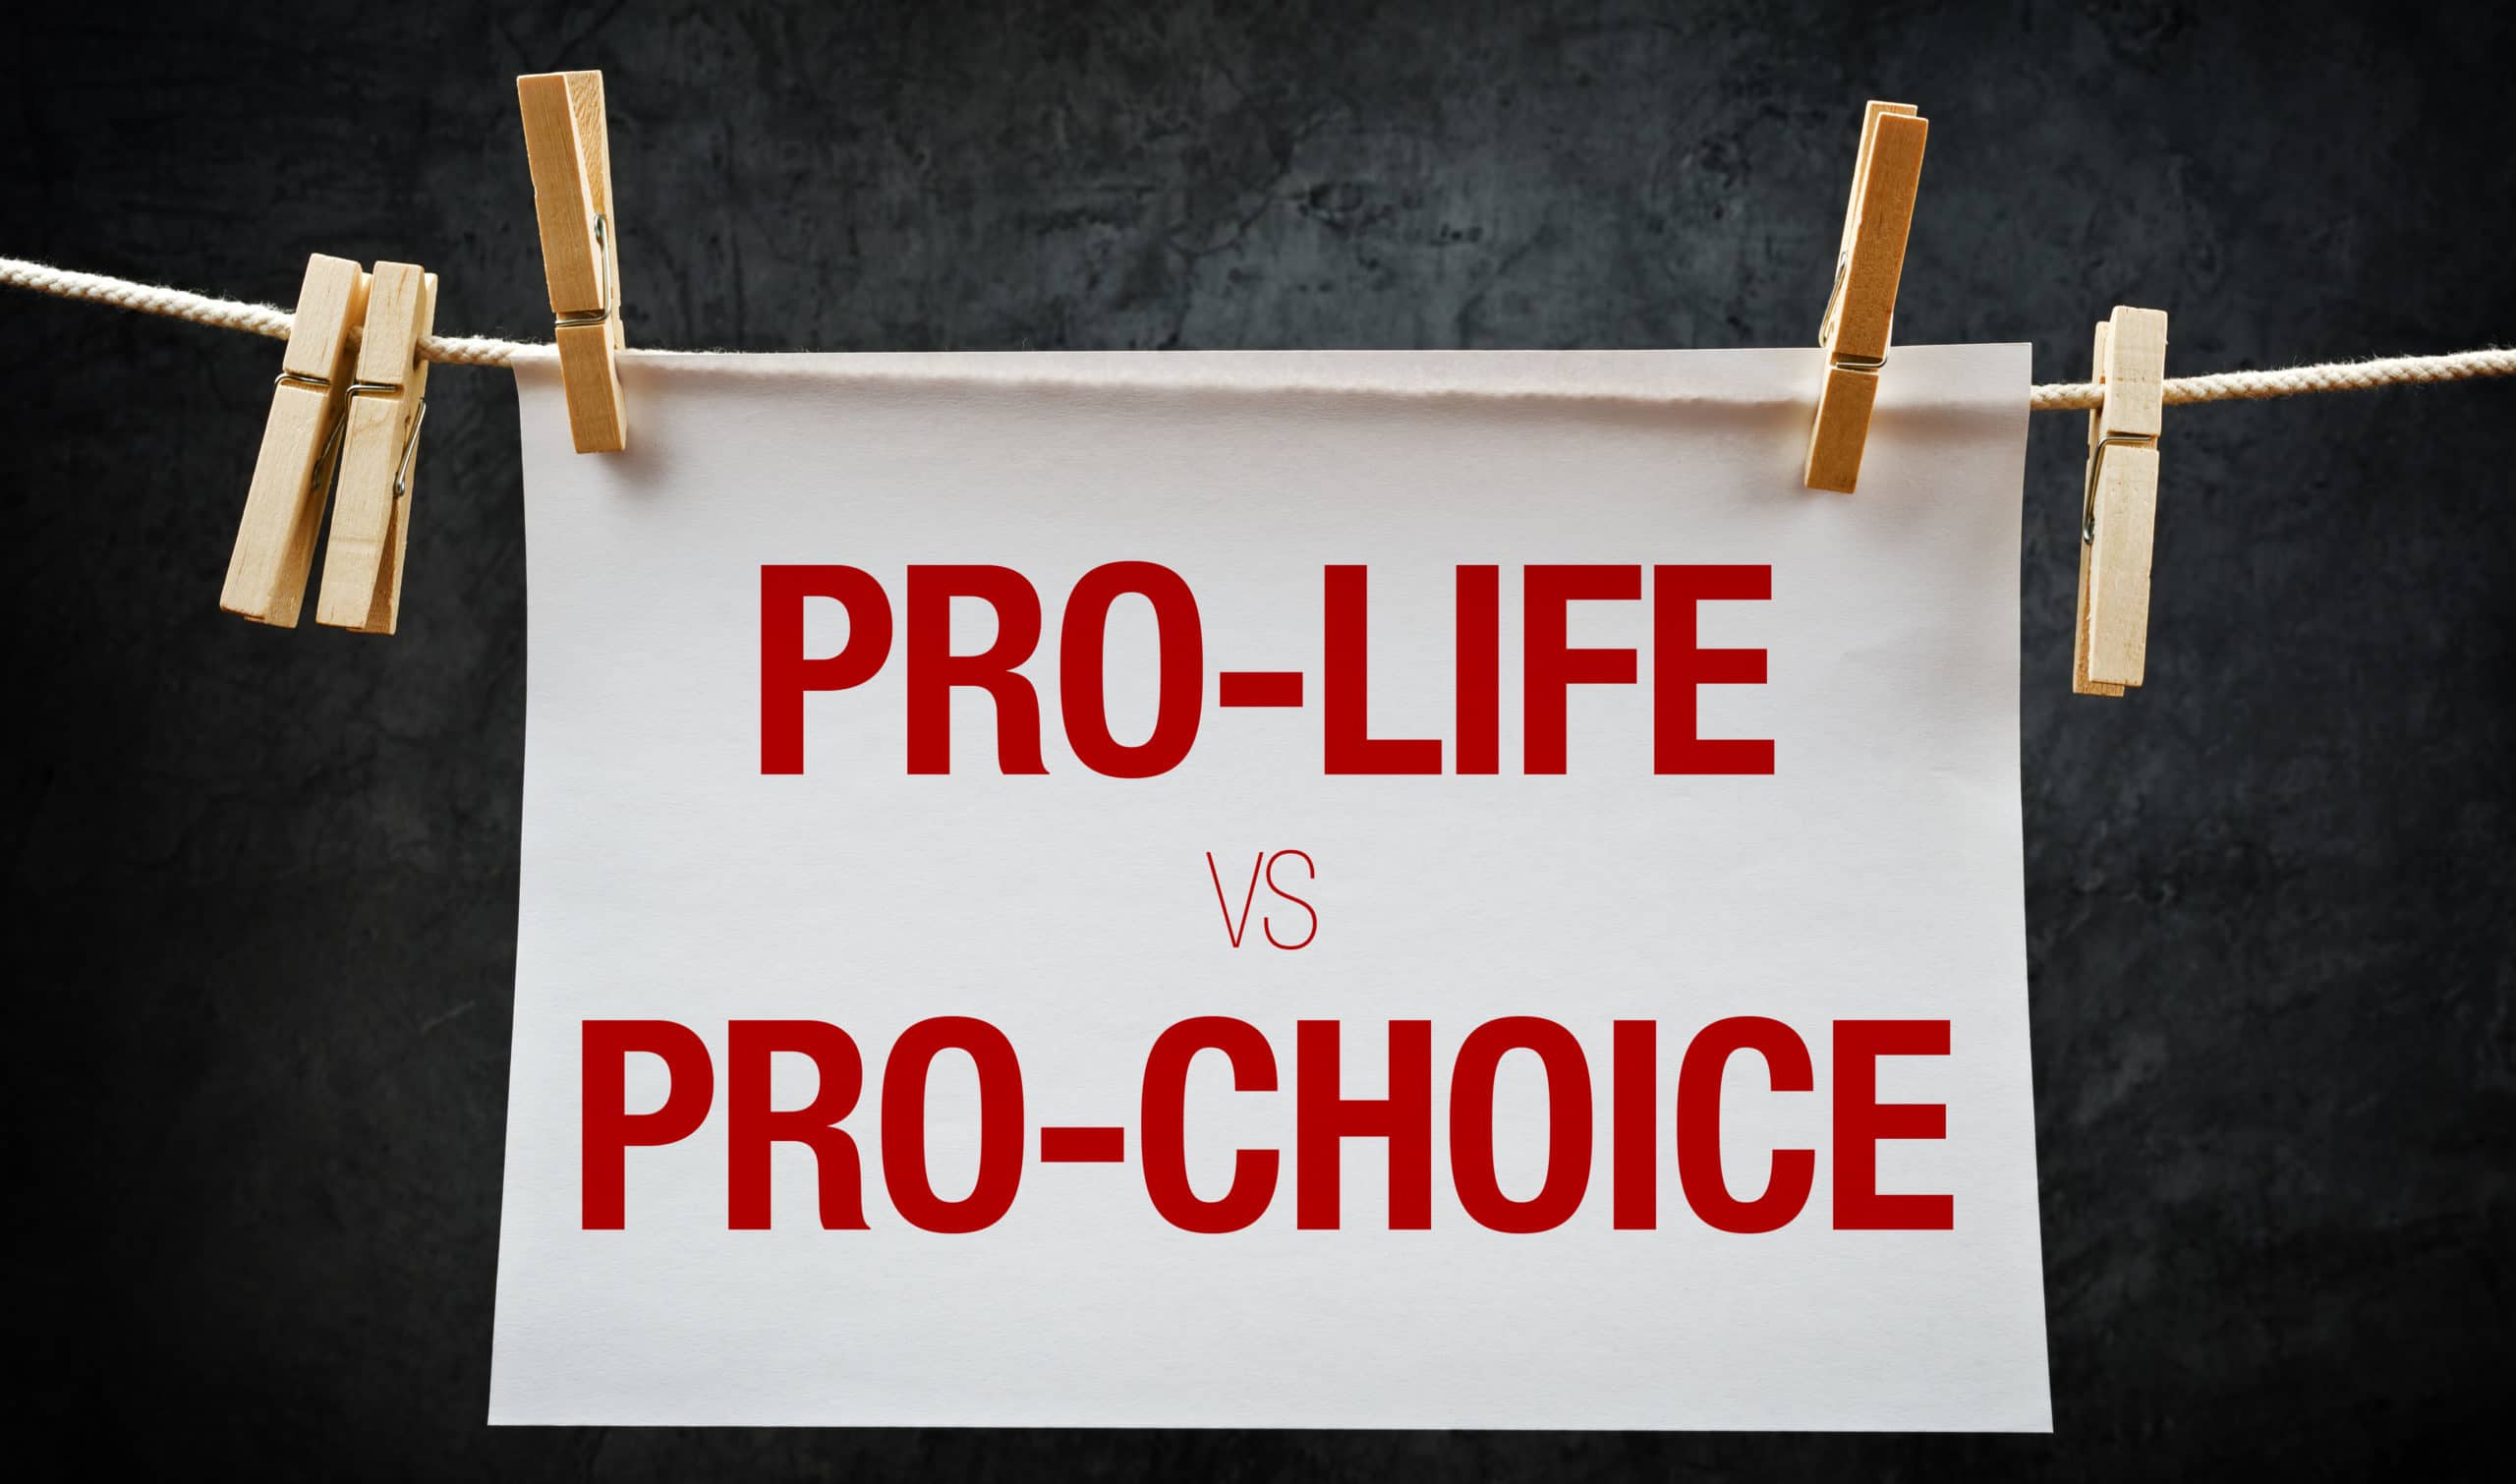 pro life vs pro choice sign